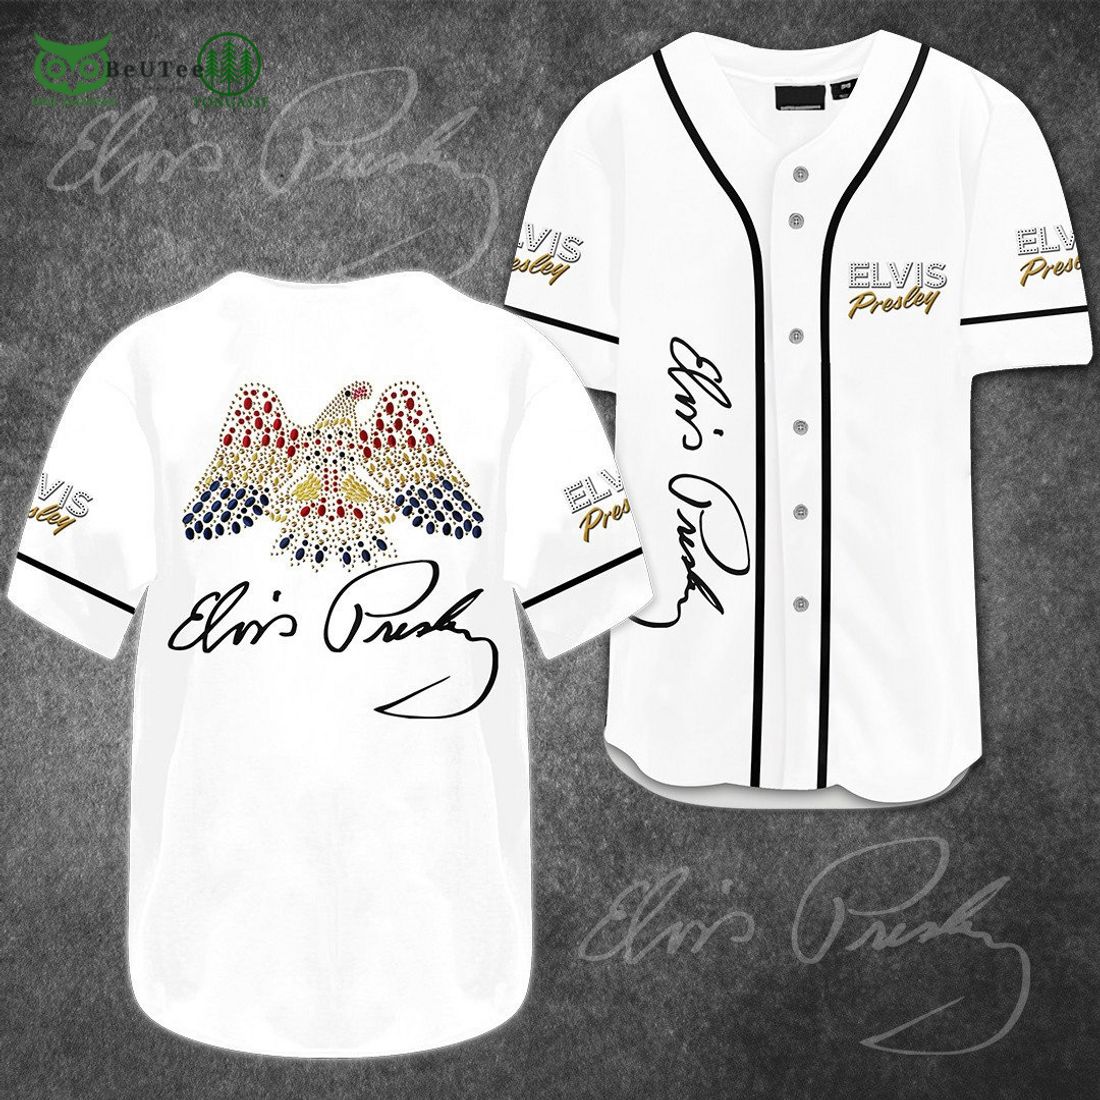 Chicago White Sox Elvis Presley Baseball Jersey -  Worldwide  Shipping